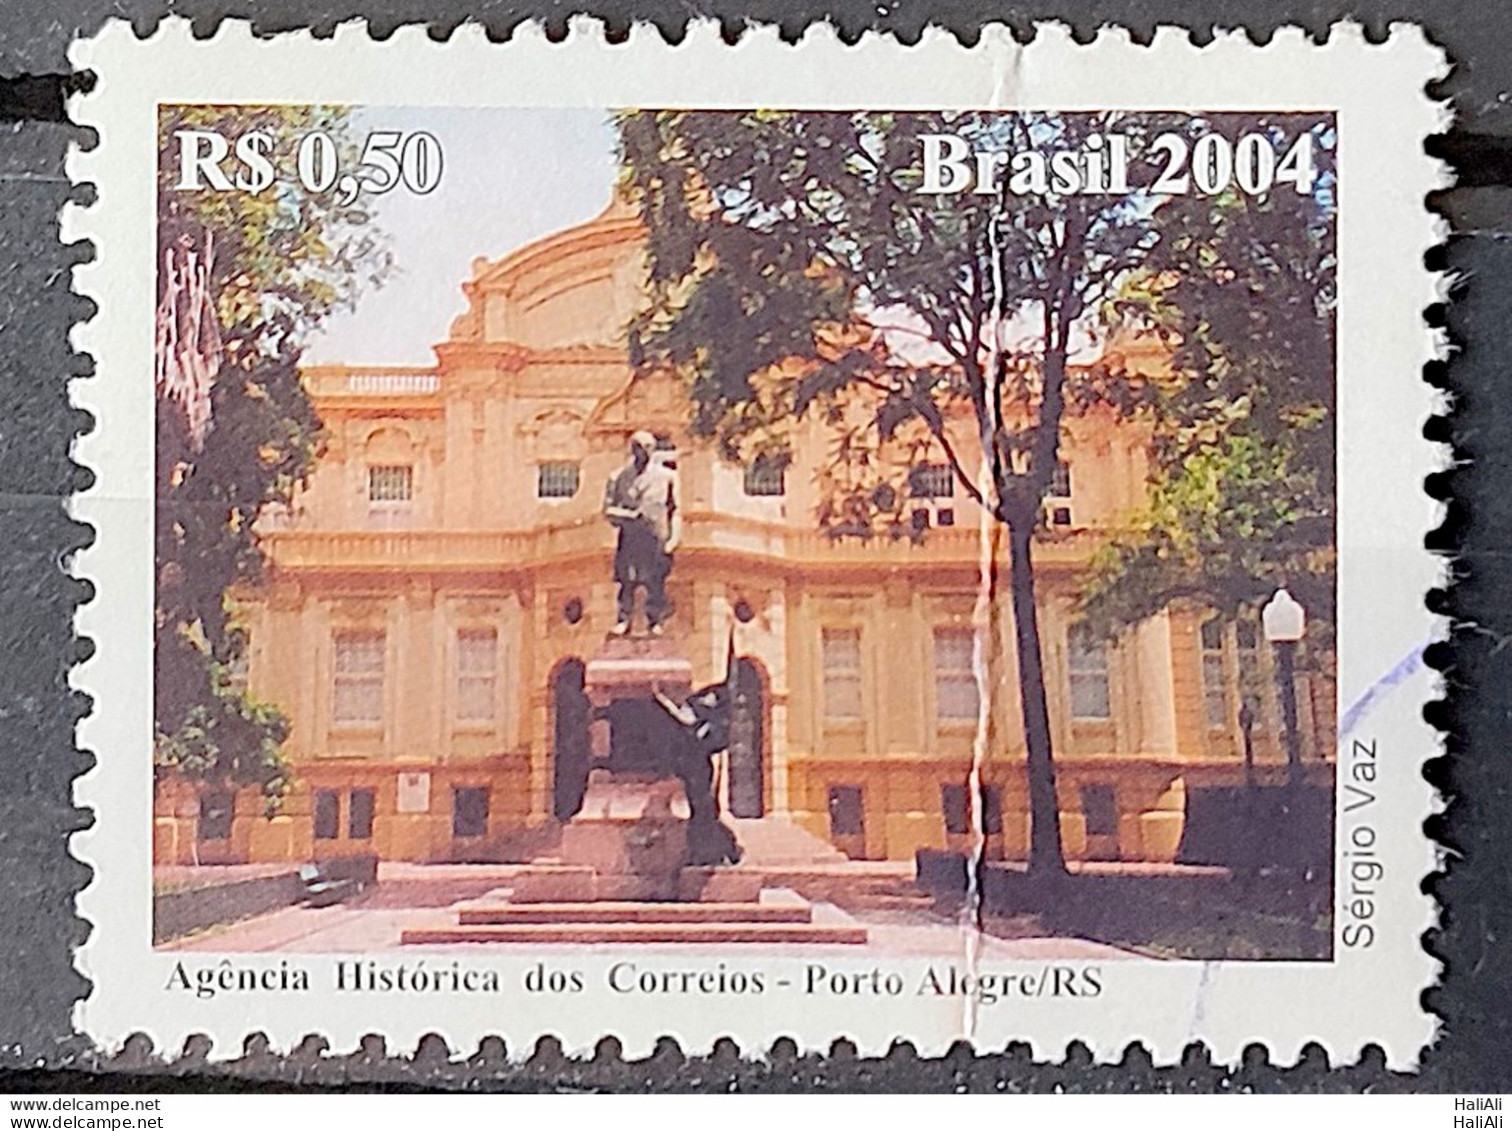 C 2600 Brazil Stamp Historic Agency Of Post Office Porto Alegre Postal Service 2004 Circulated 2 - Gebruikt